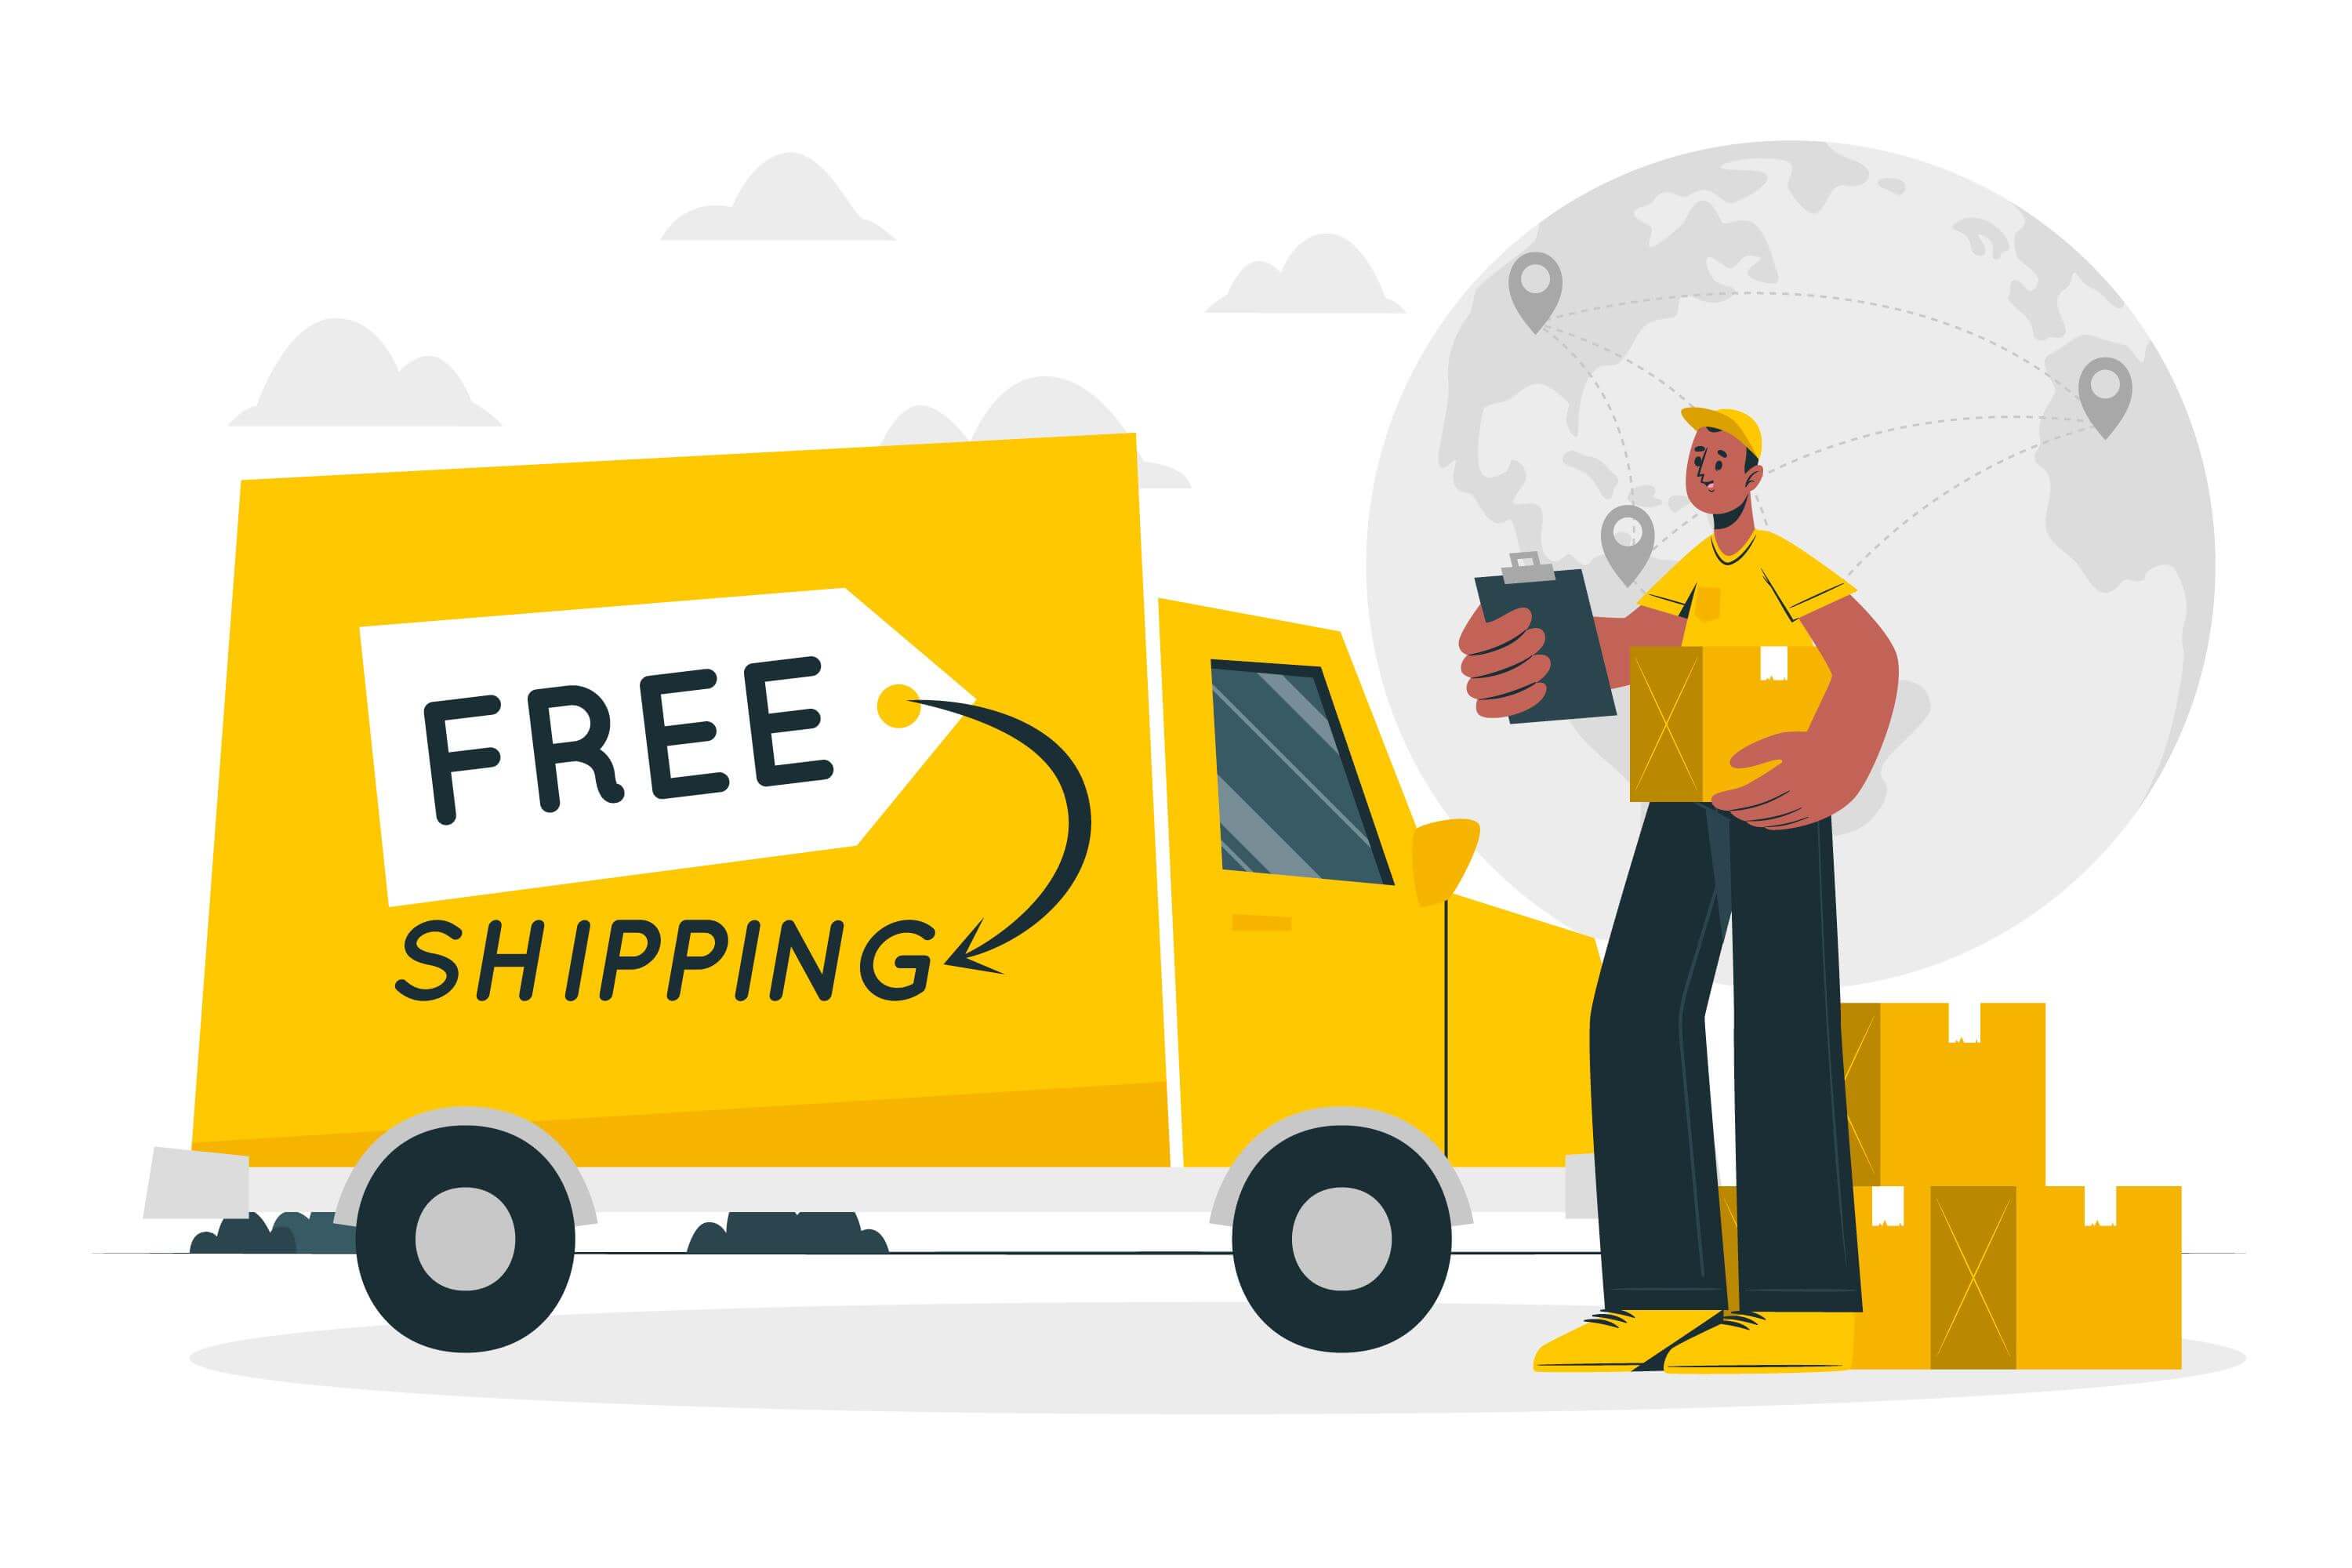 Shopify free shipping illustration